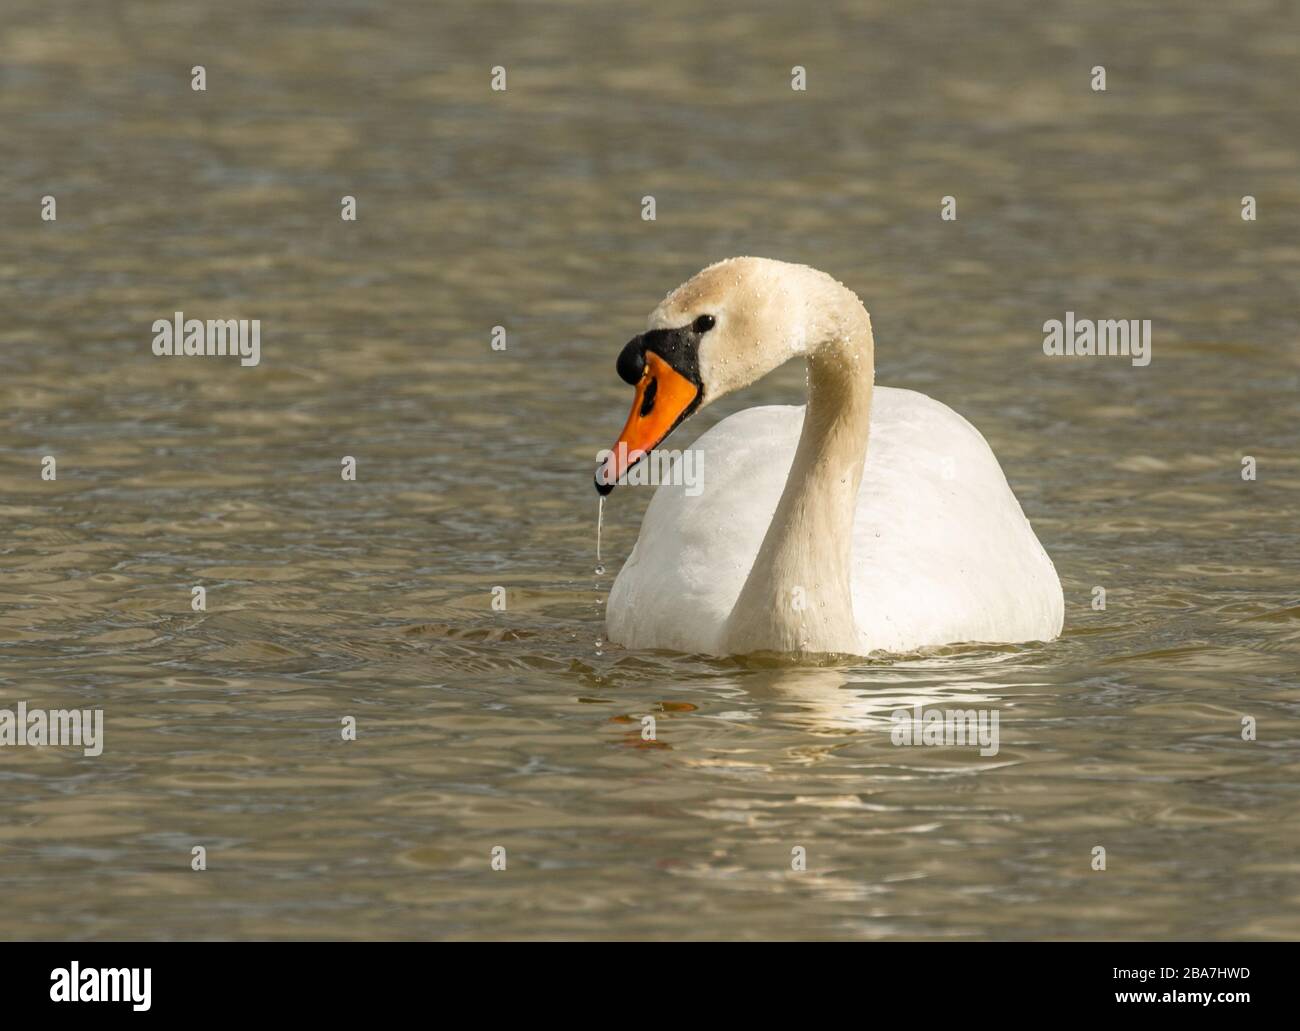 white swan bird swimming in the water with water dripping down its beak, animal wild Stock Photo